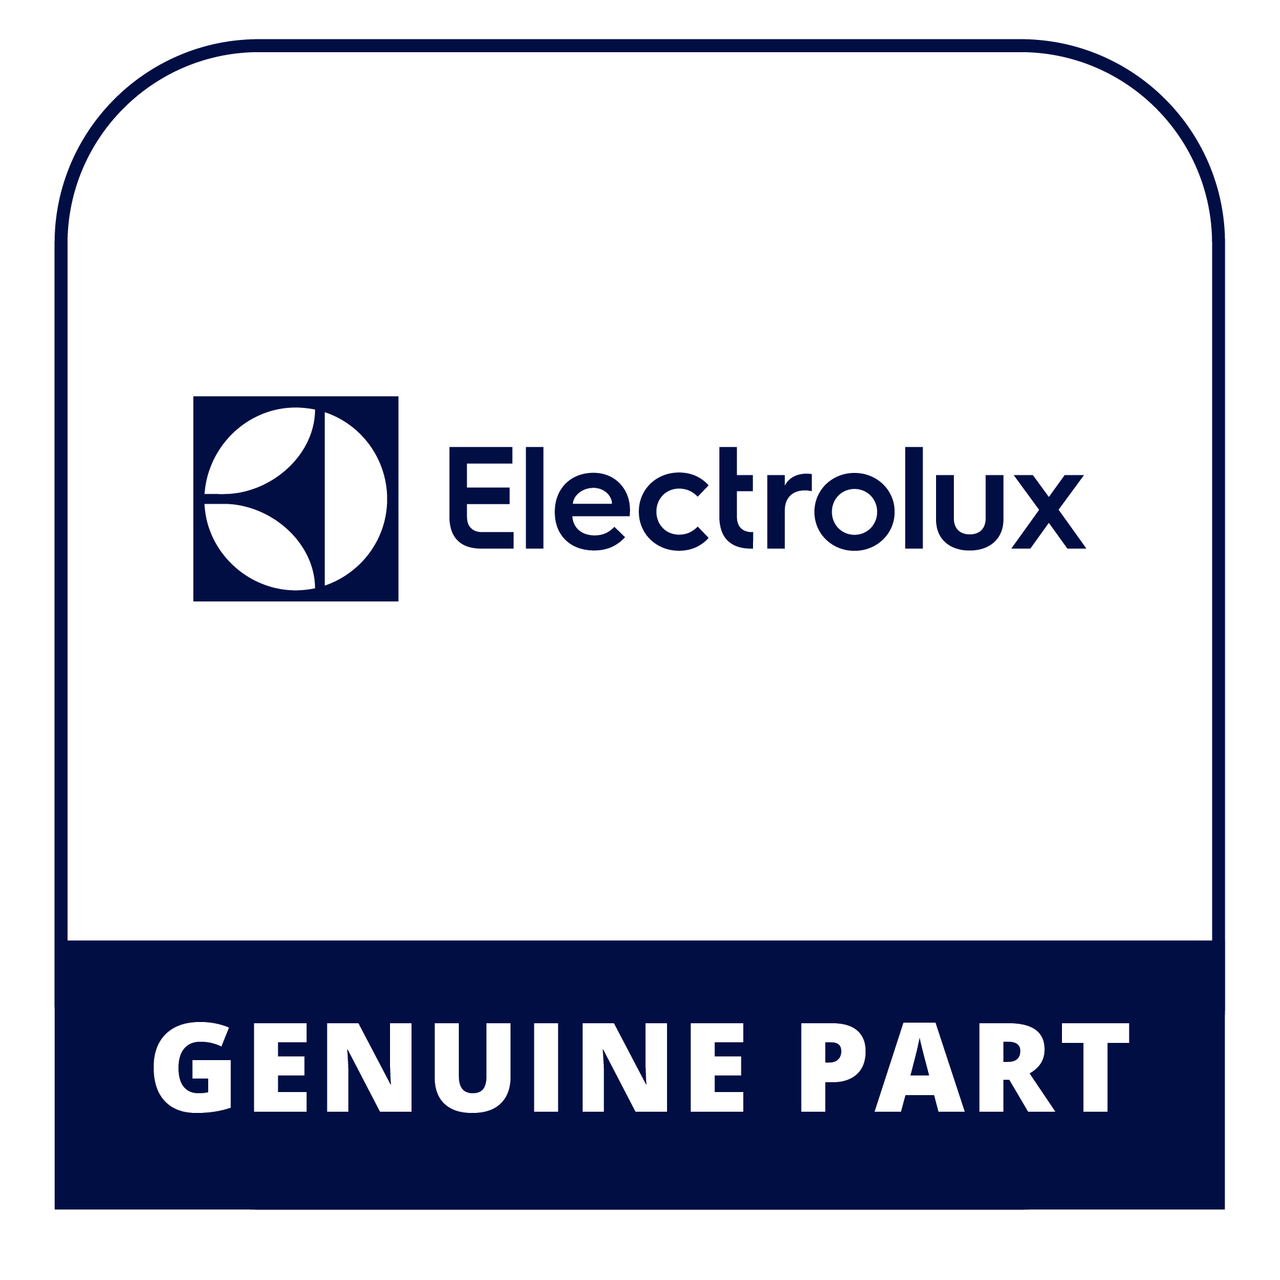 Frigidaire - Electrolux 5304495094 Remote Control - Genuine Electrolux Part